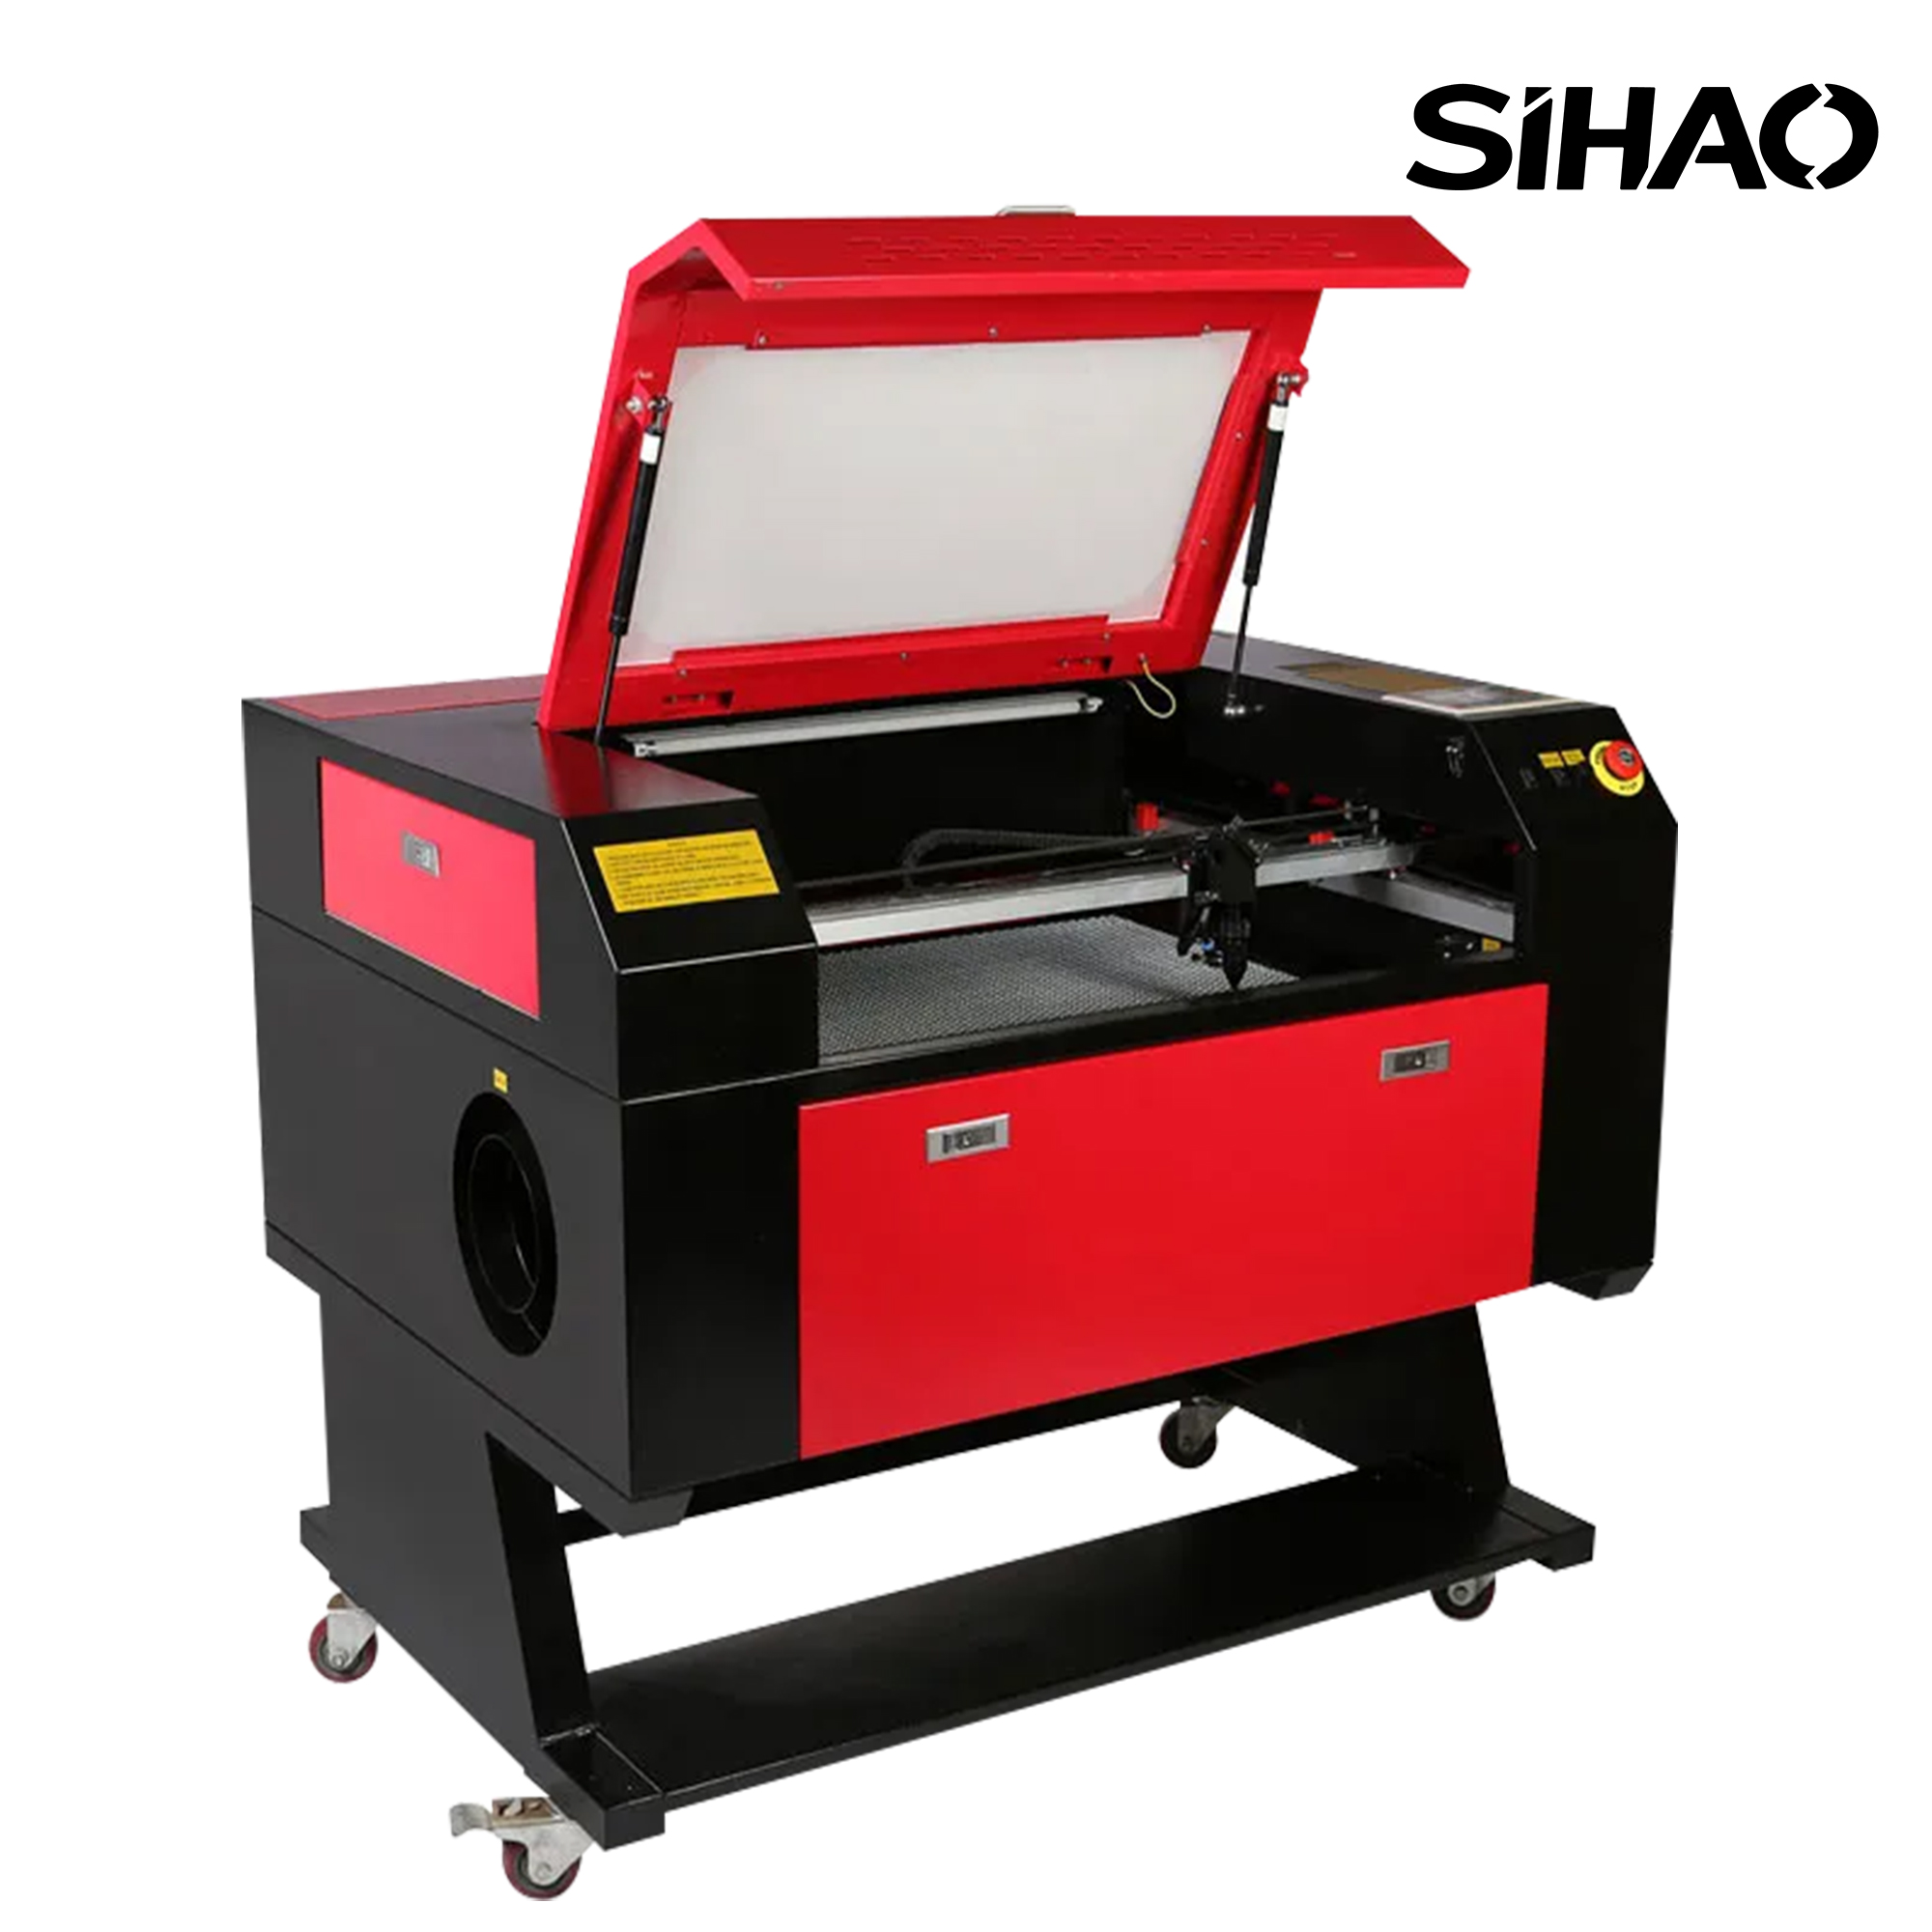 SIHAO 700X500MM 80W Laser Engraving Machine